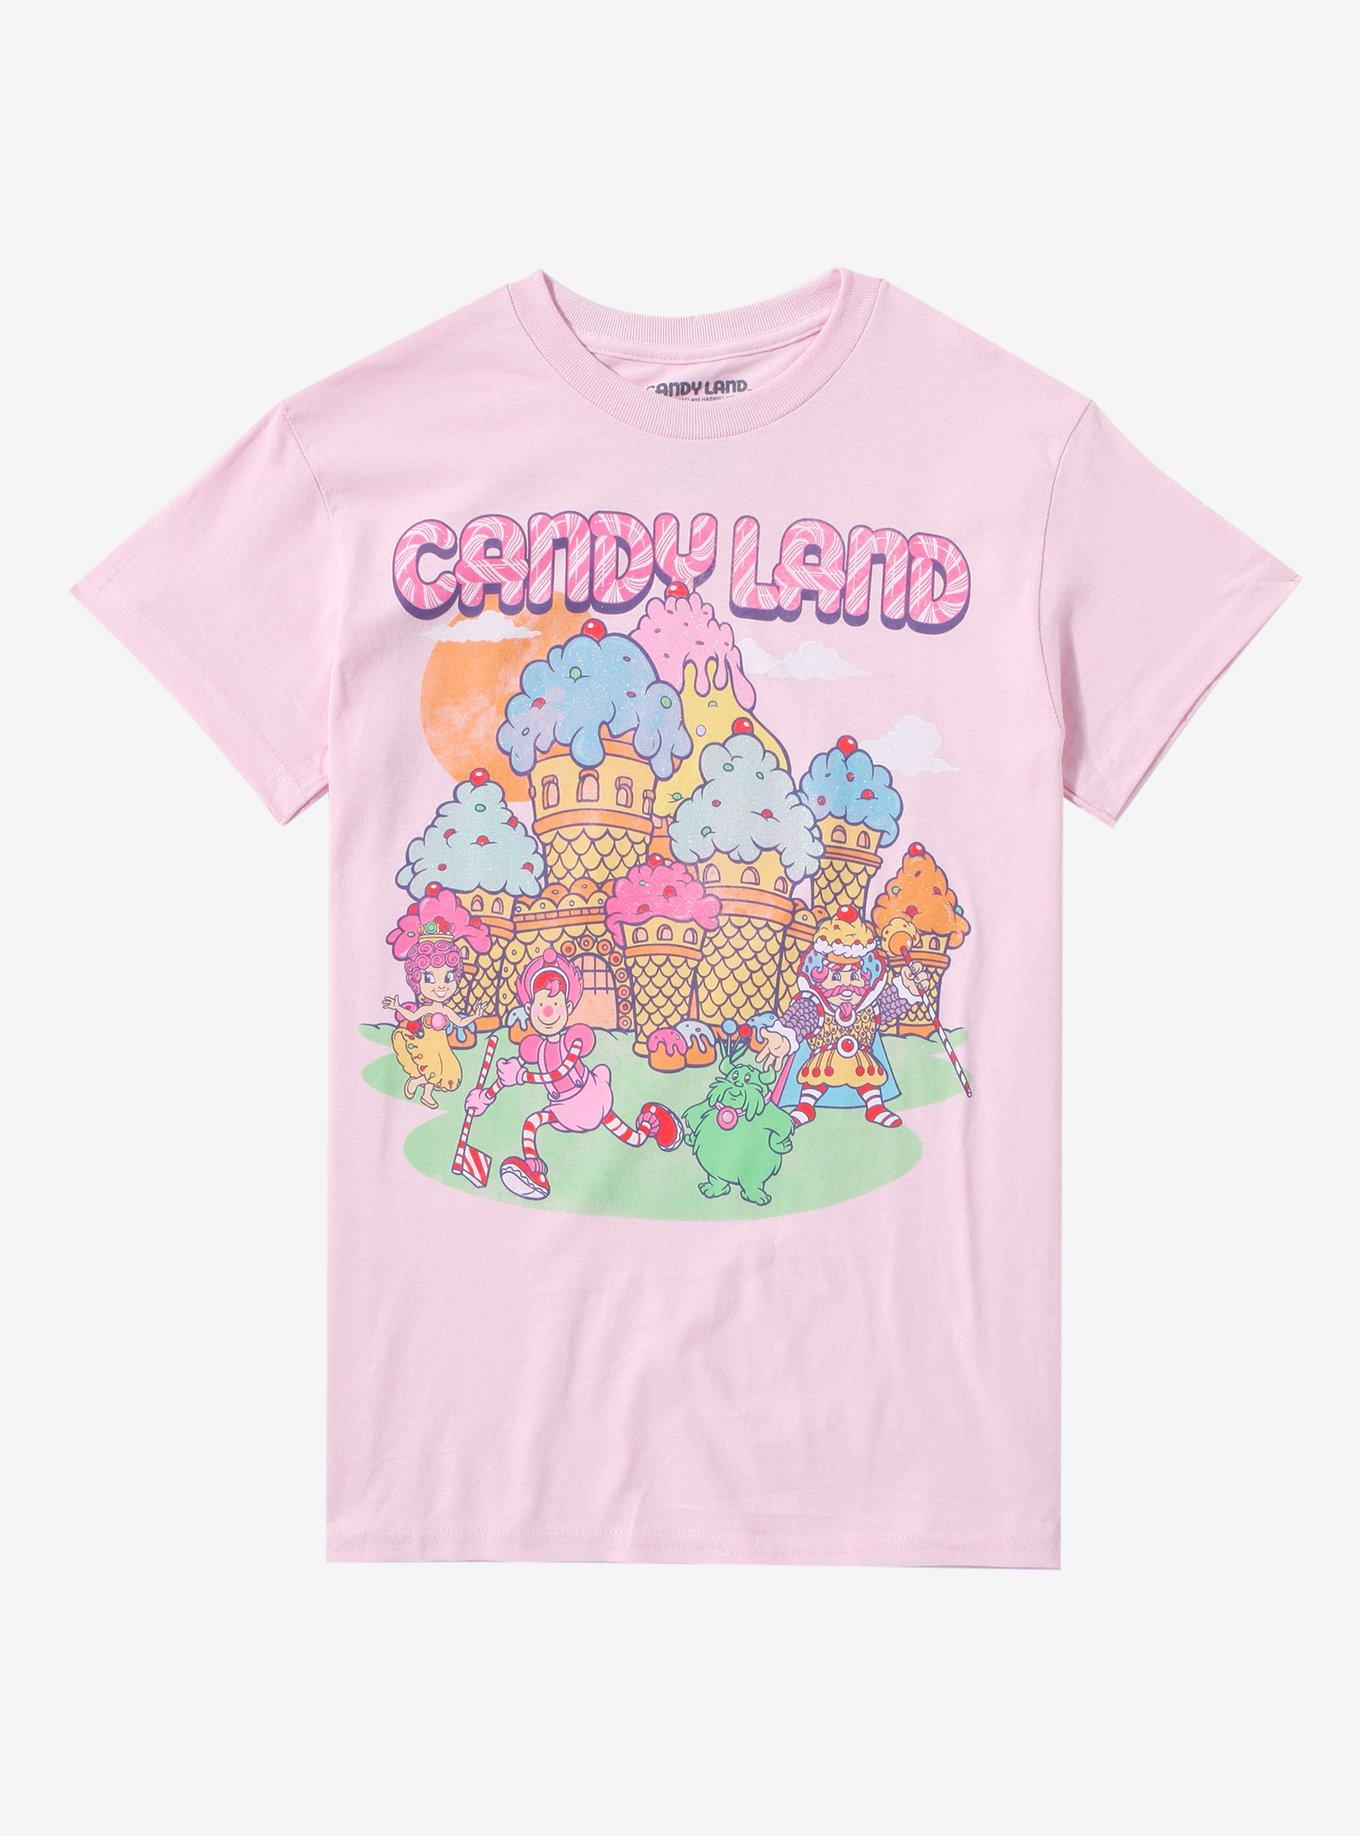 Candy Land Castle Pink Glitter Boyfriend Fit Girls T-Shirt, MULTI, hi-res